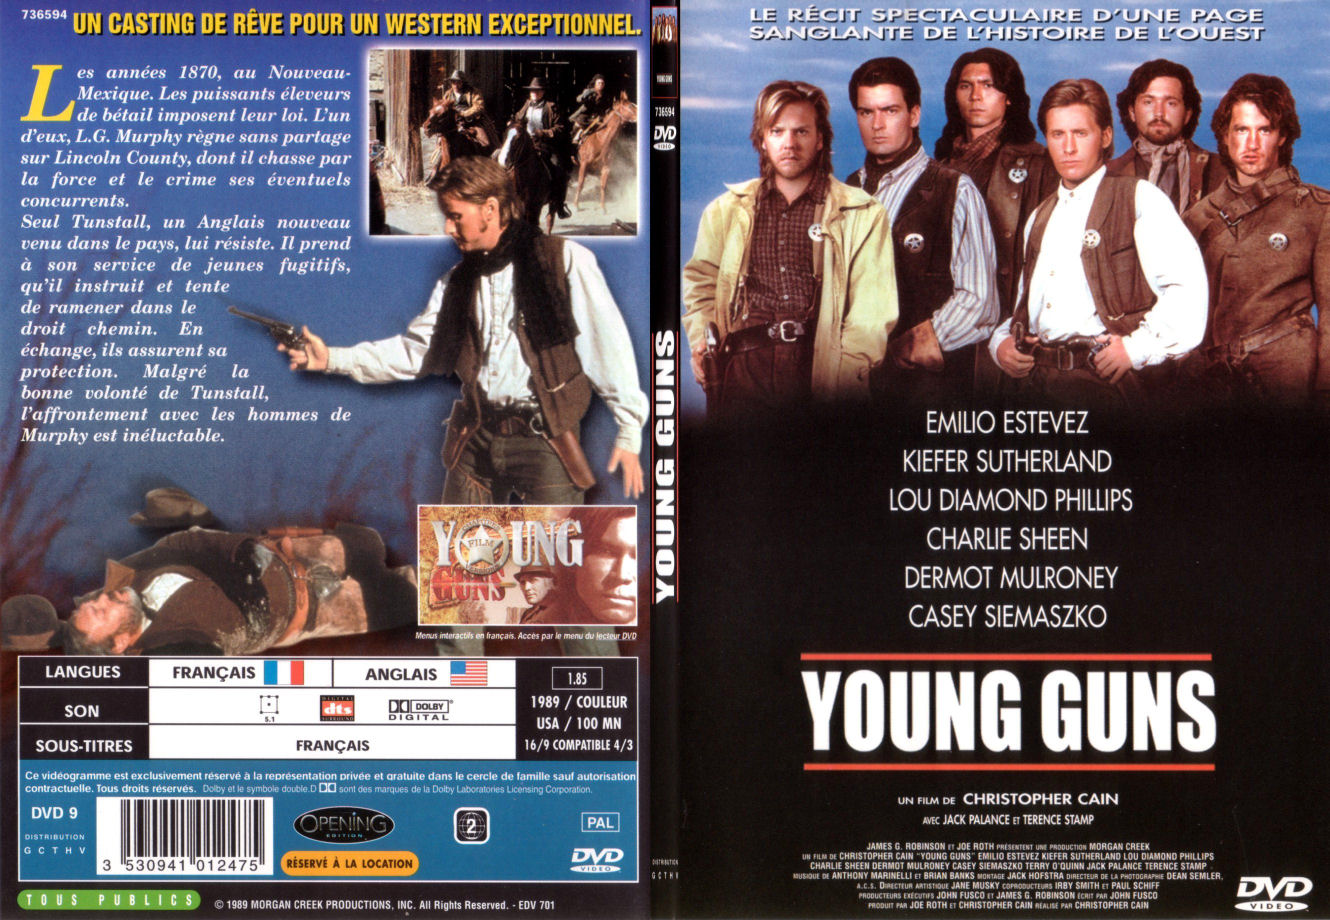 Jaquette DVD Young guns - SLIM